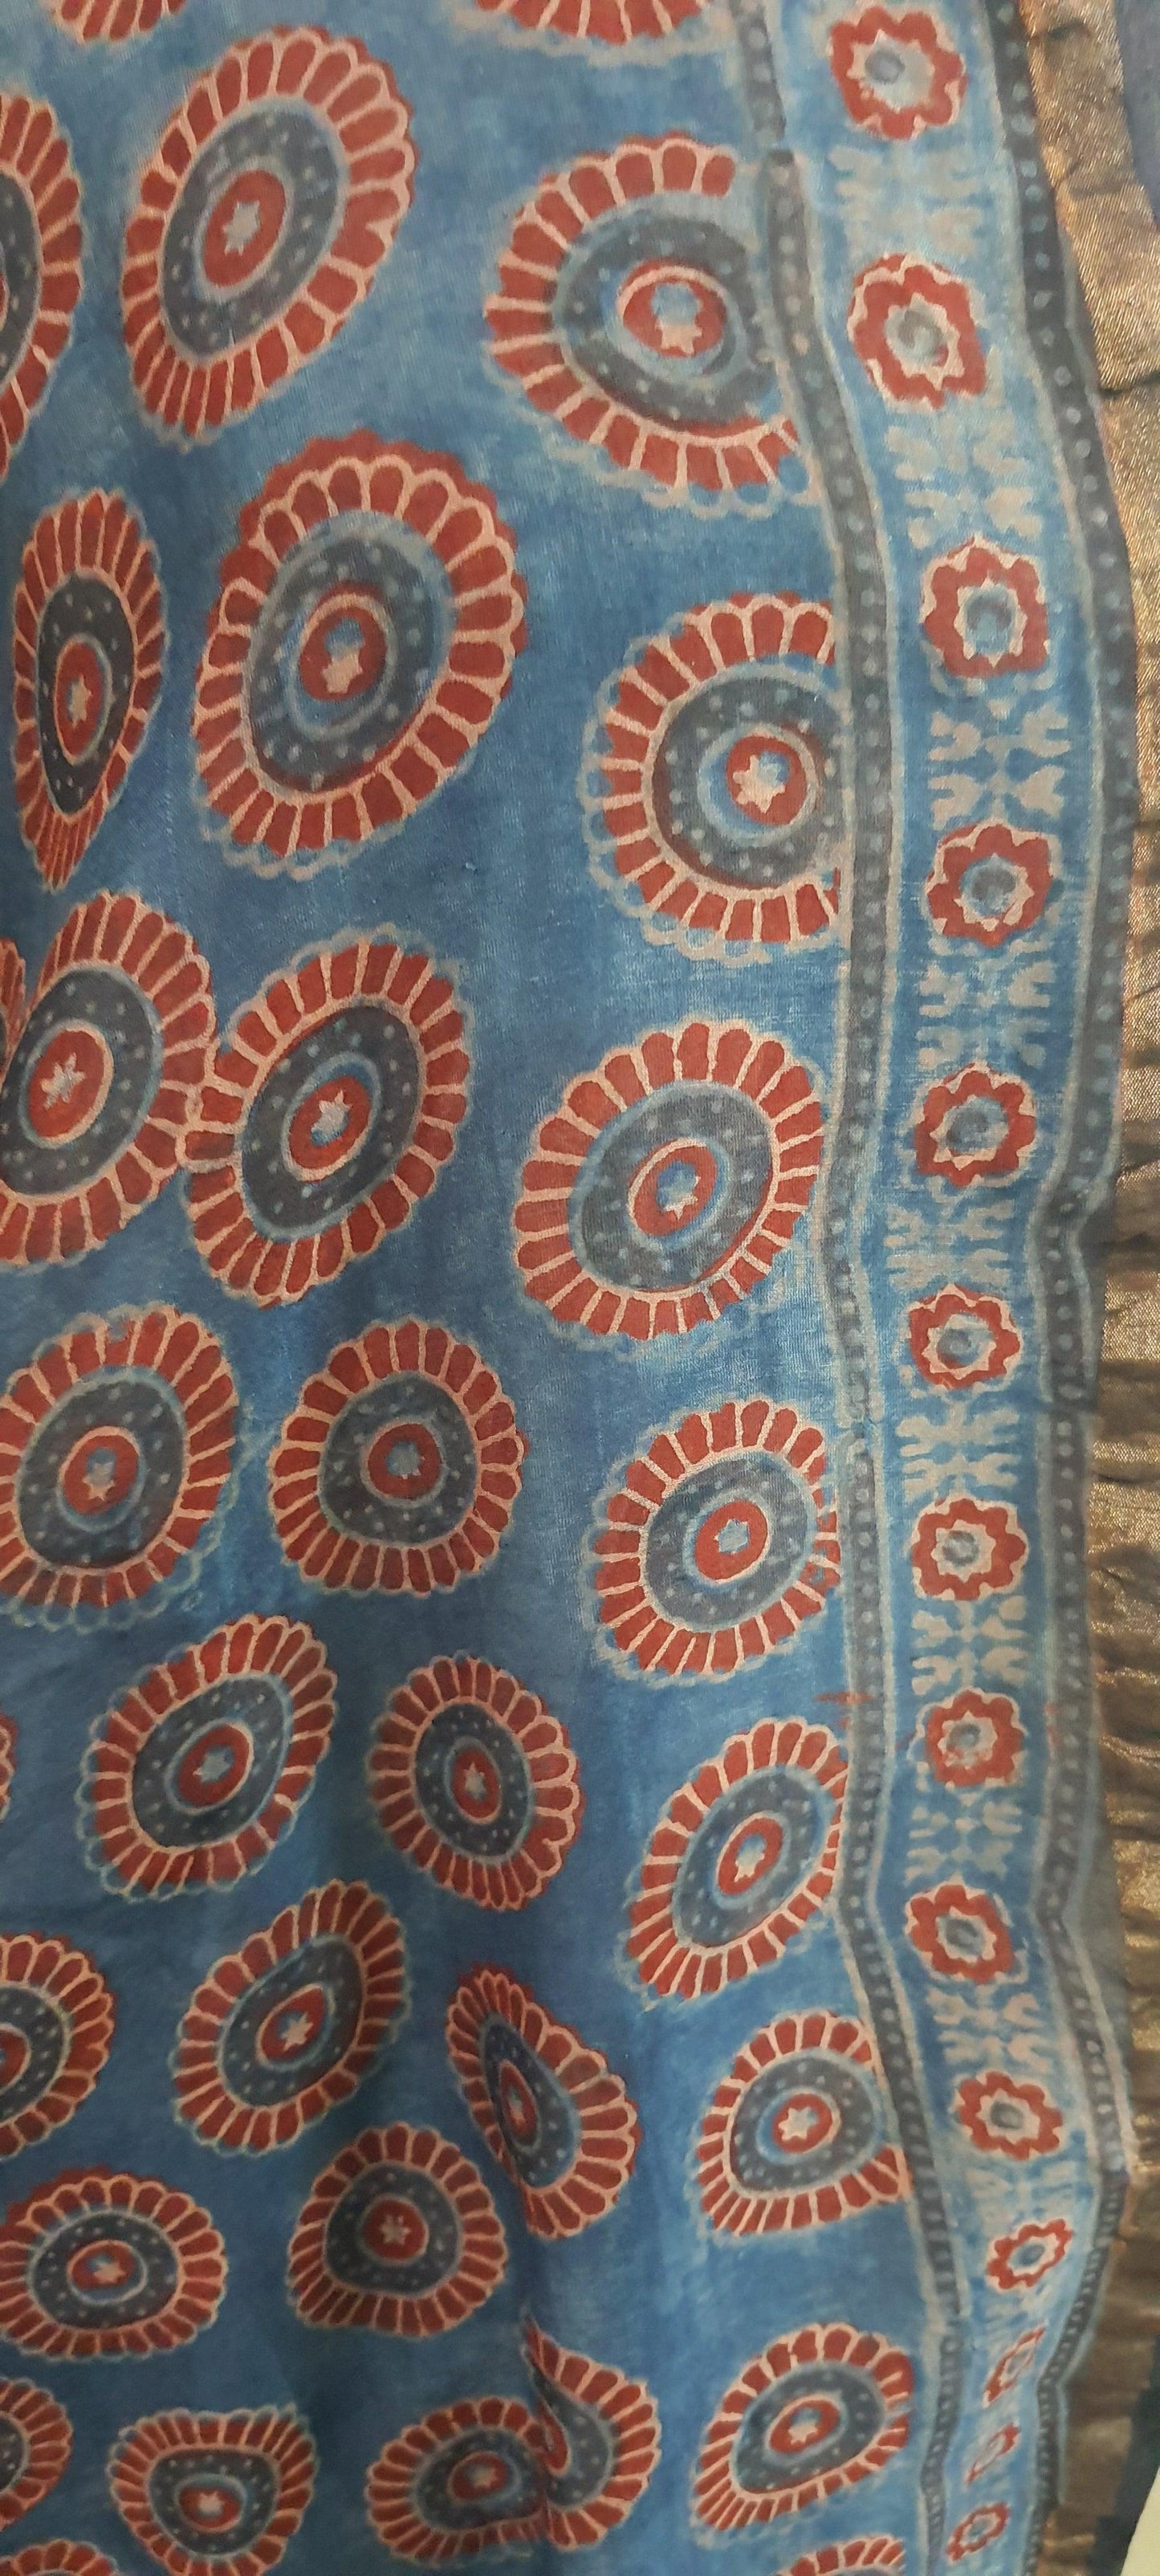 Indigo Blue Chanderi Cotton With zari Edging Ajrakh Printed Dupatta DP97 - Ethnic's By Anvi Creations